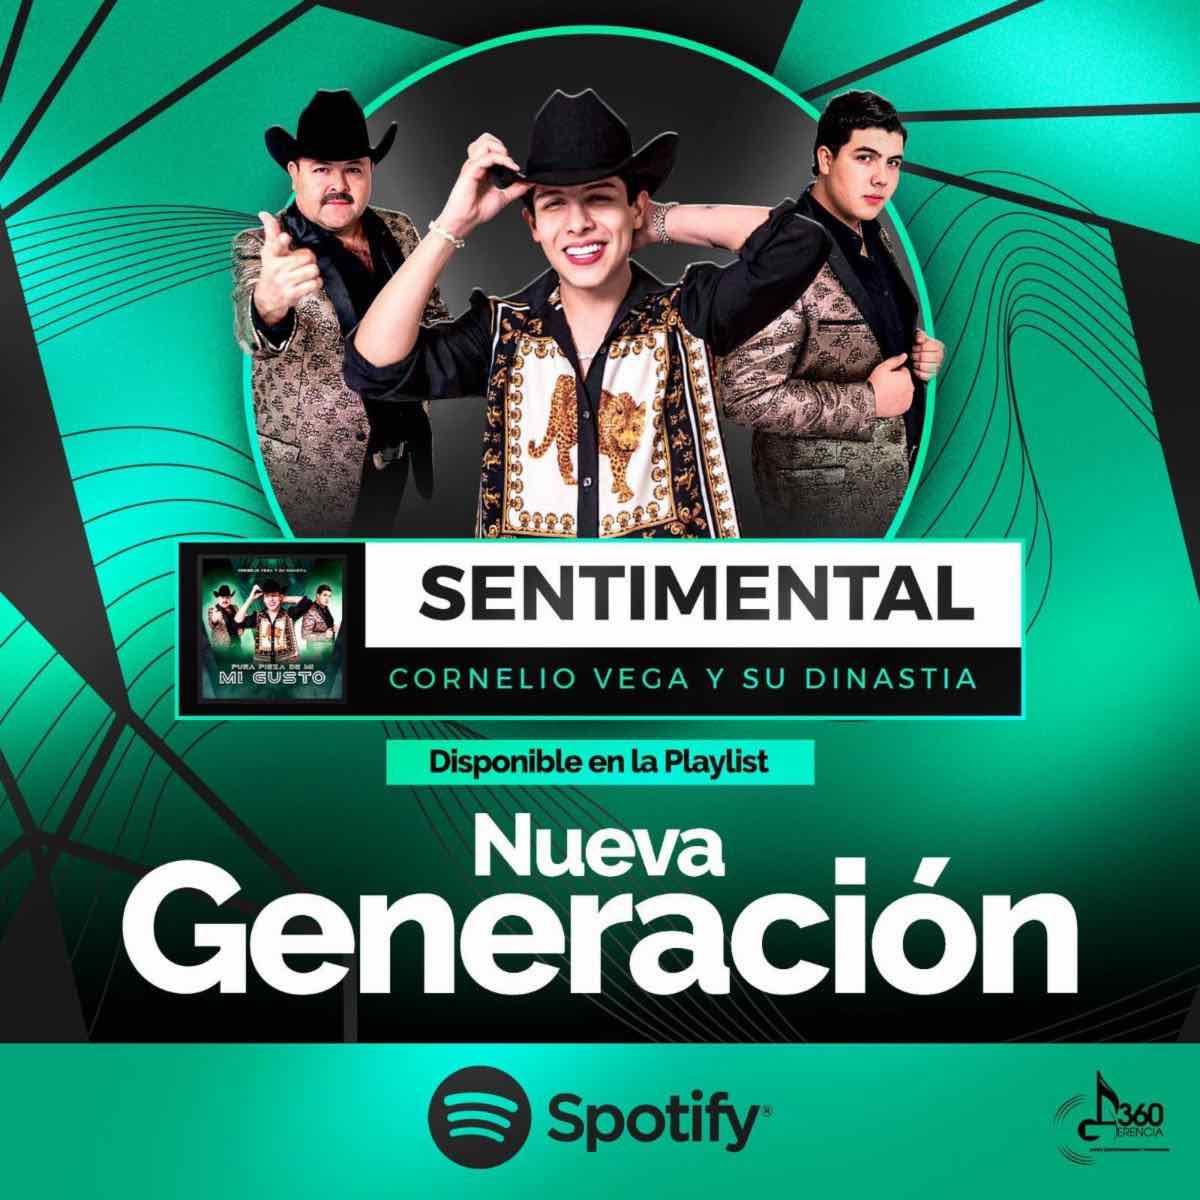 sentimental-cornelio-vega-su-dinastia-gerencia360-spotify